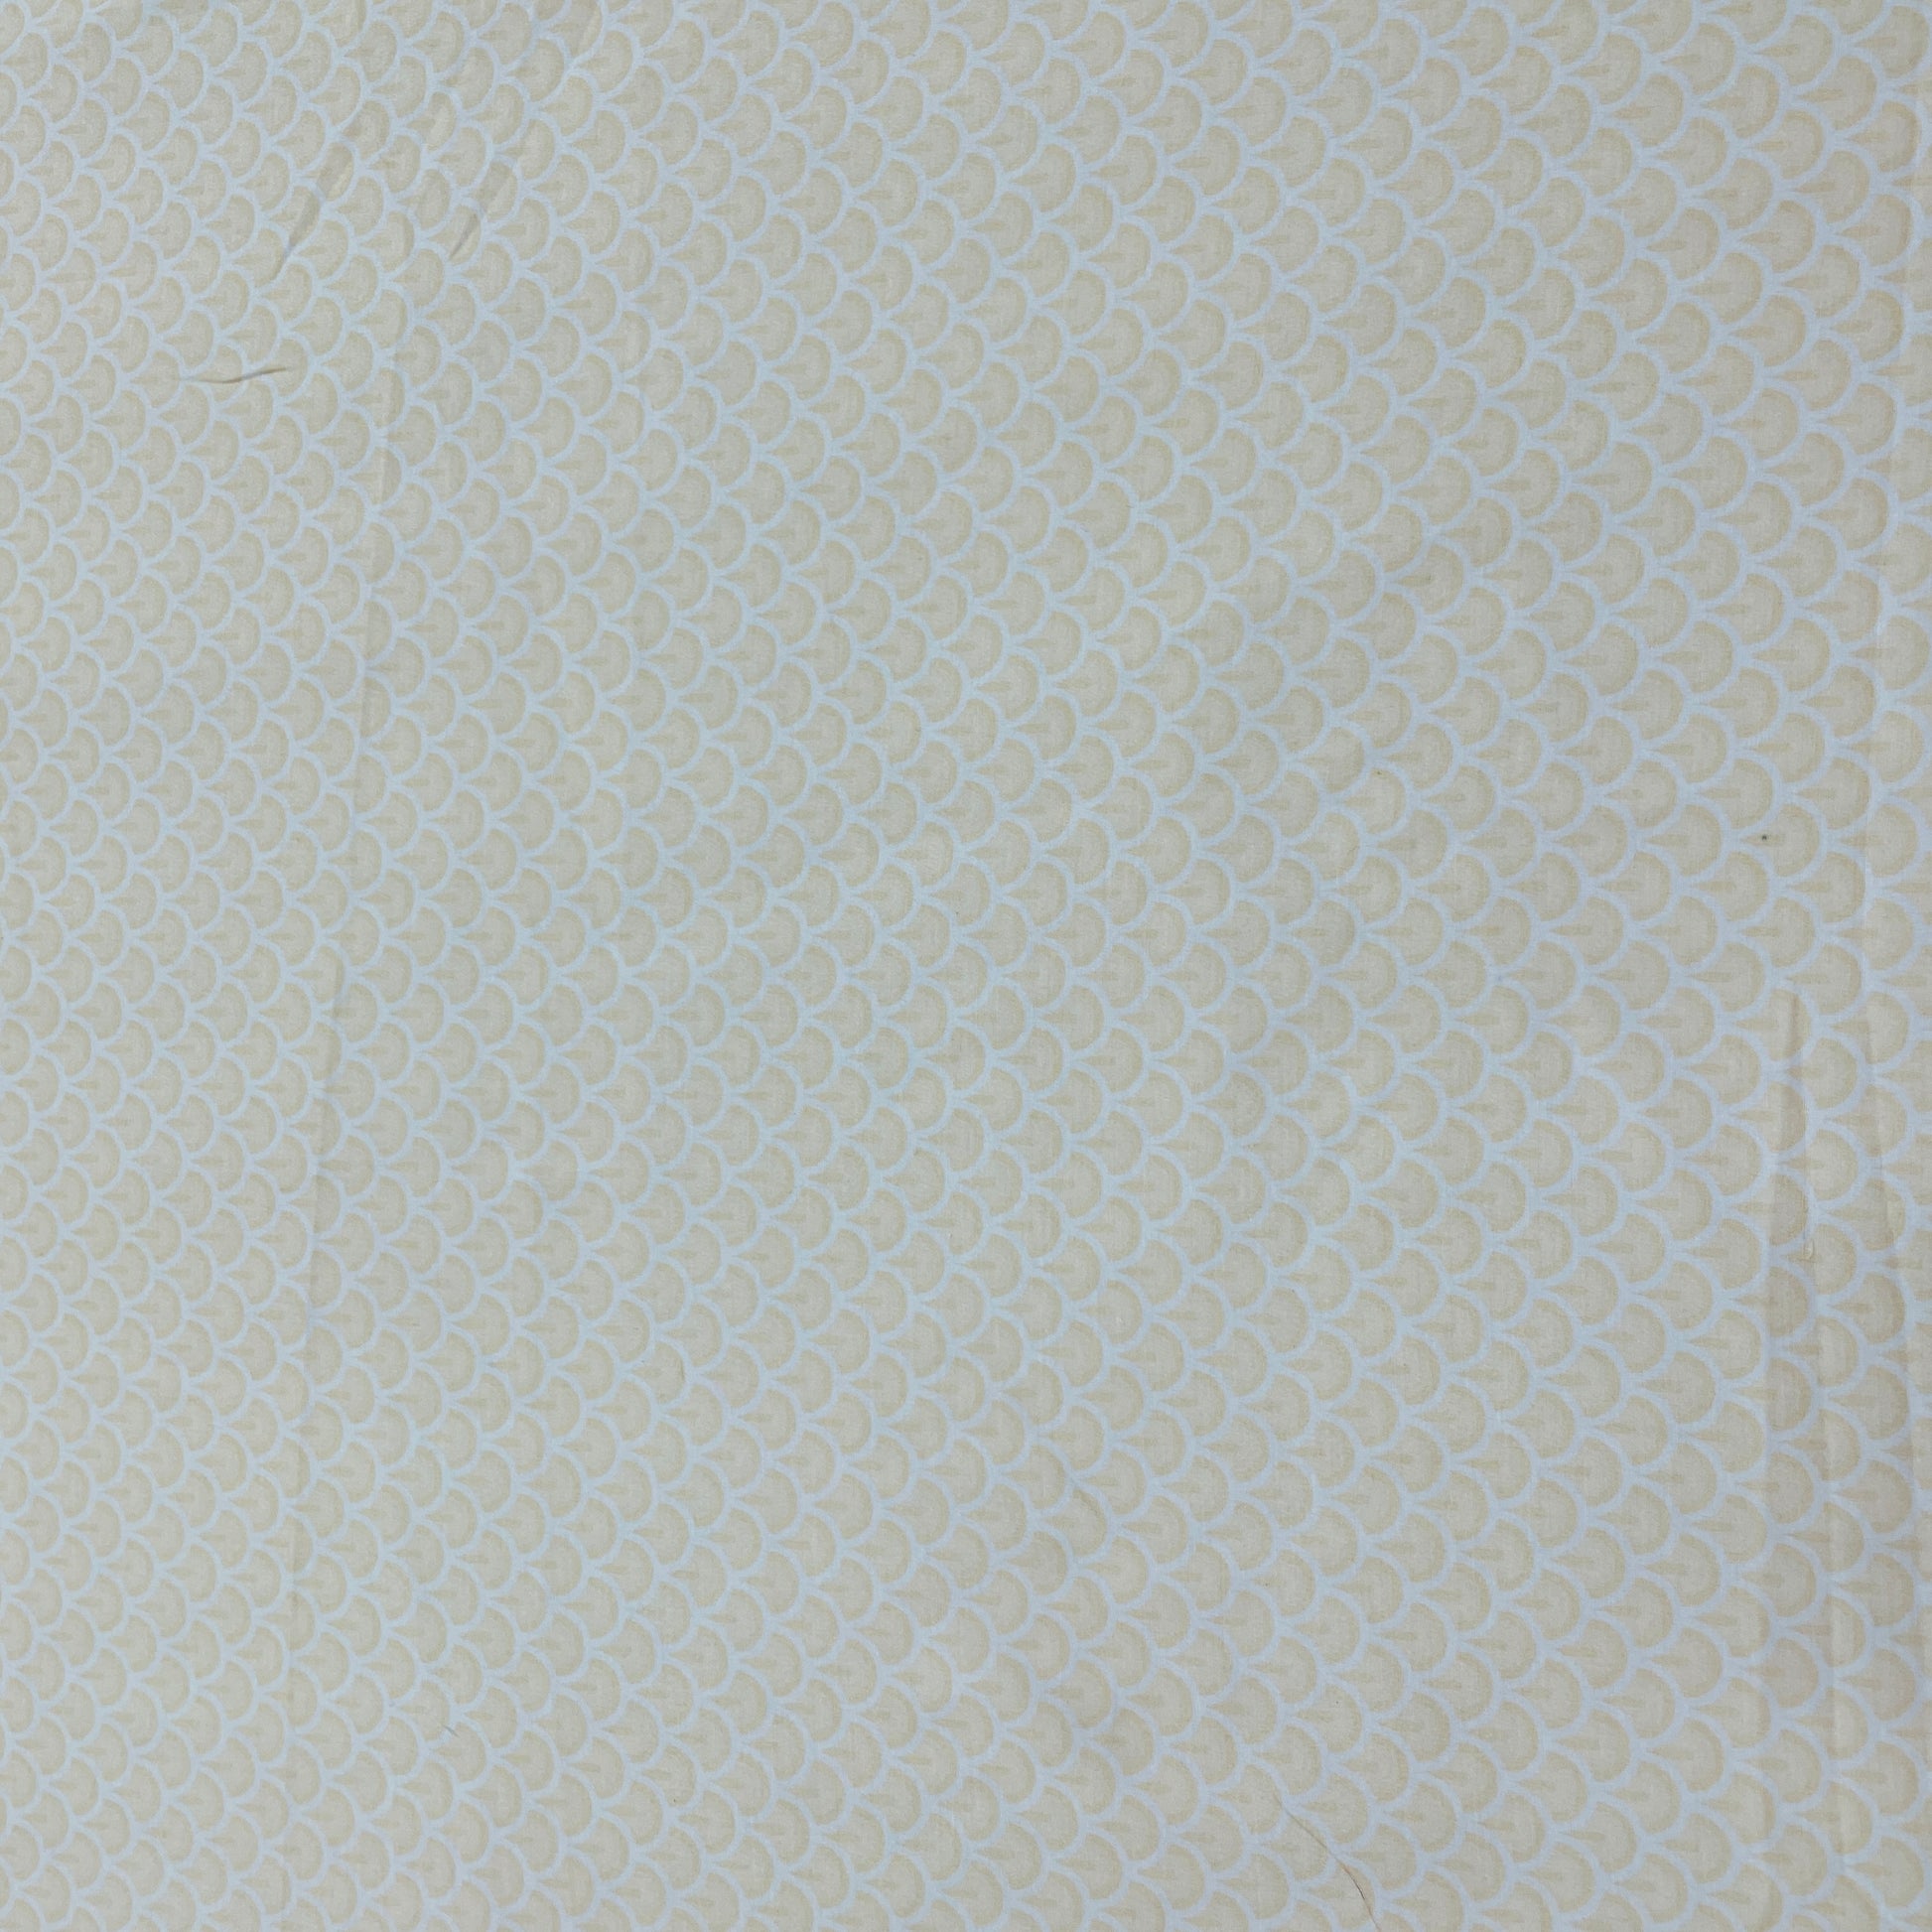 Cream Traditional Print Cotton Satin Fabric - TradeUNO